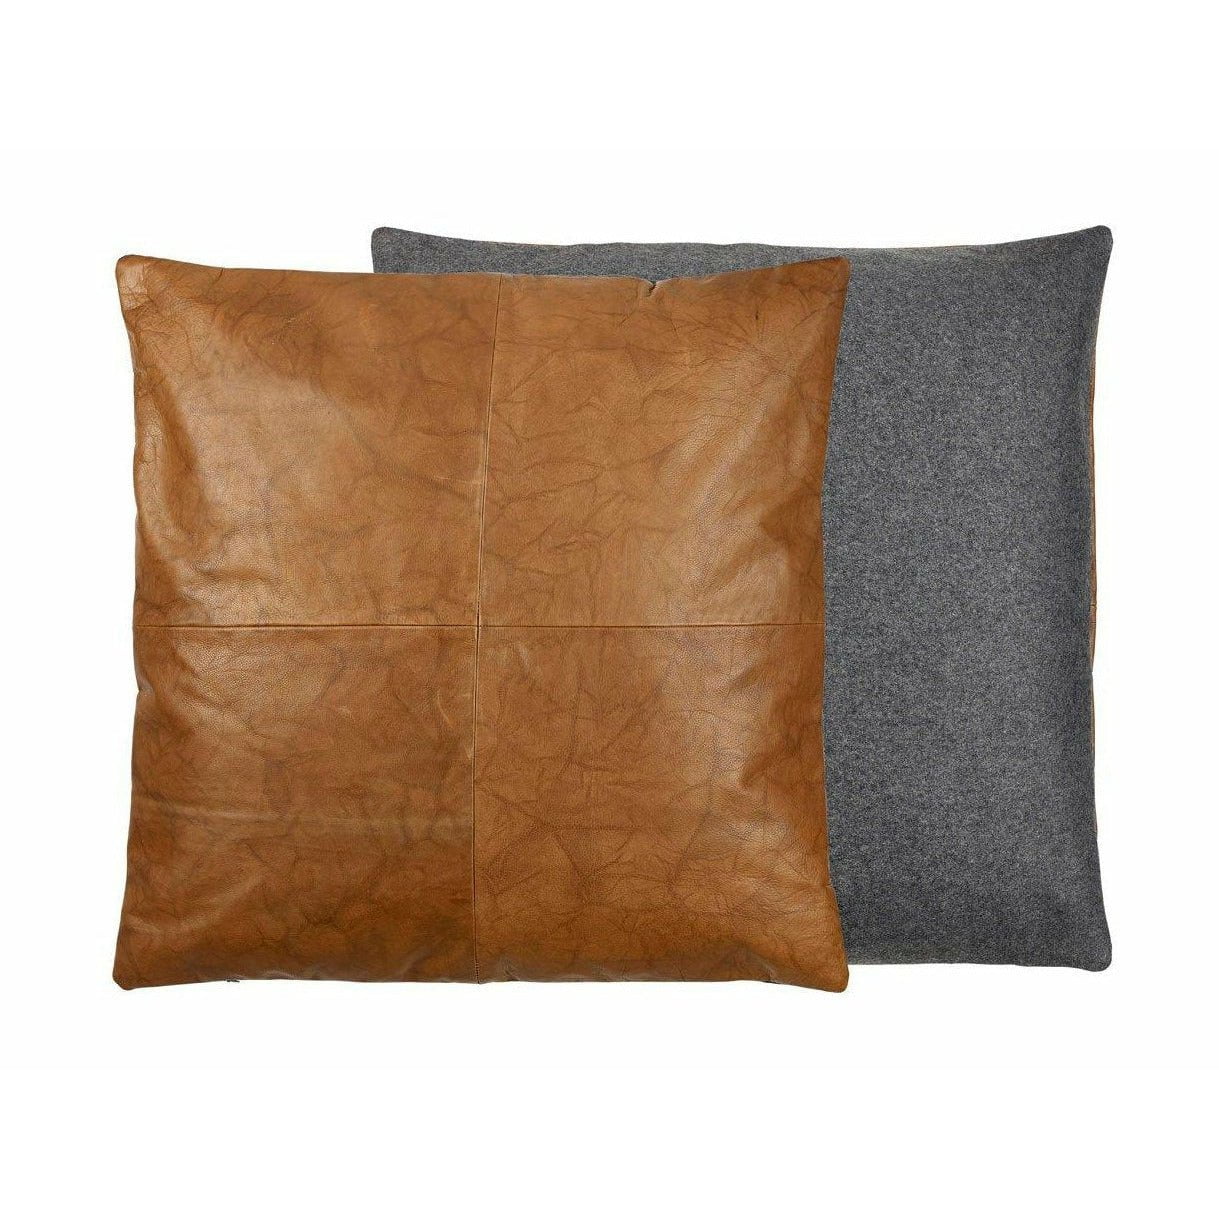 Södahl Lodge Leather Cushion, Black/Tobacco